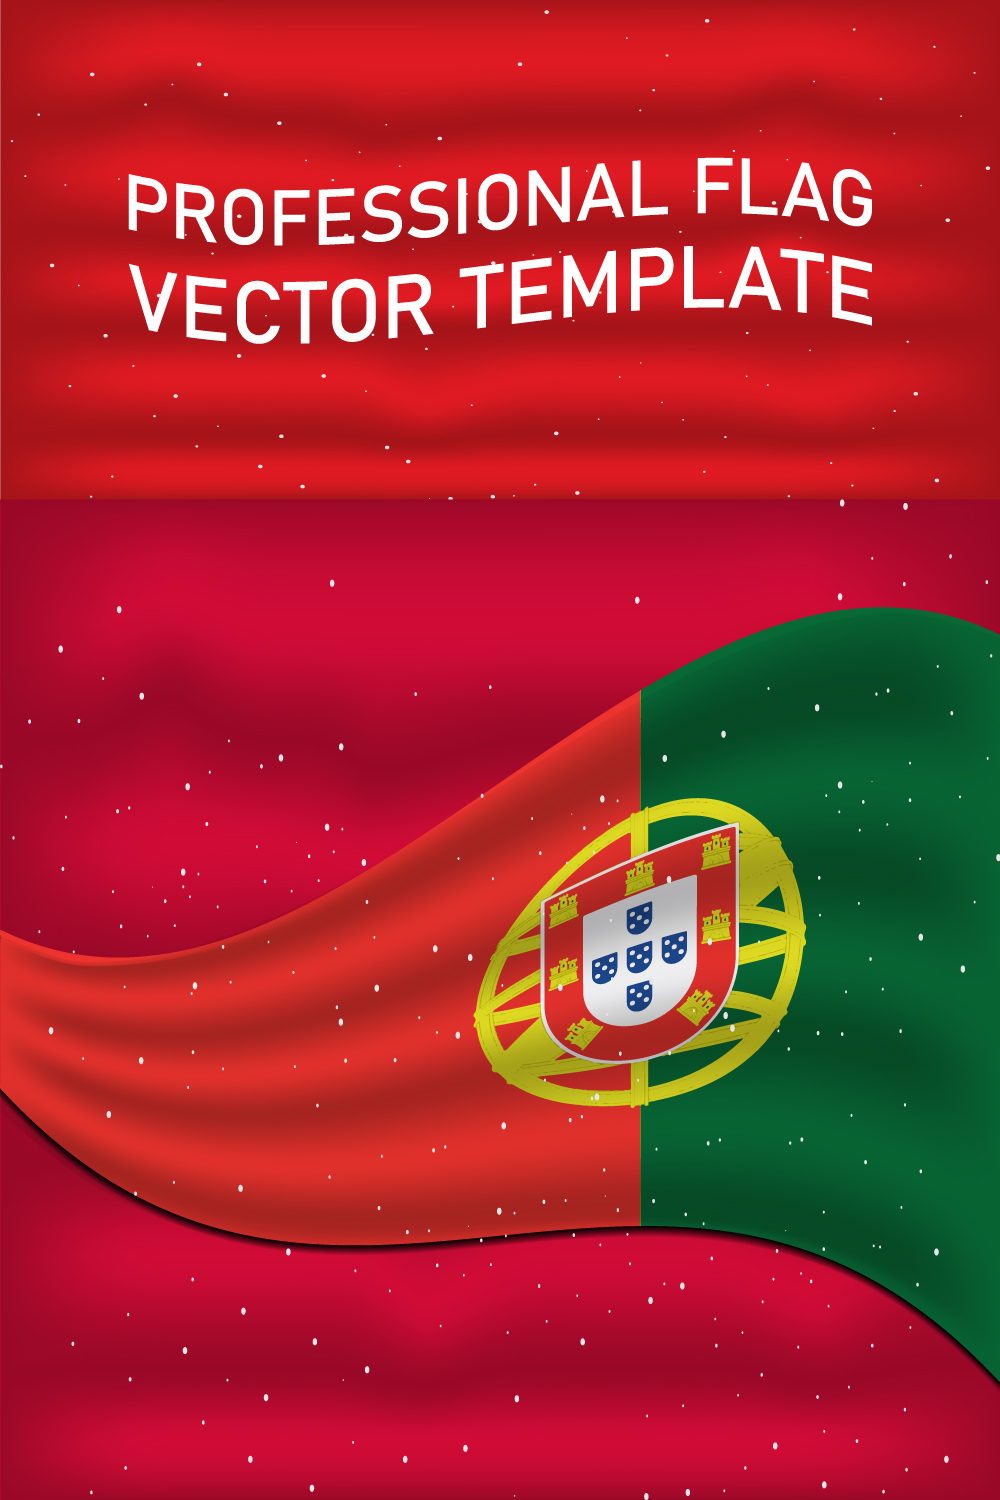 Elegant image of the flag of Portugal.